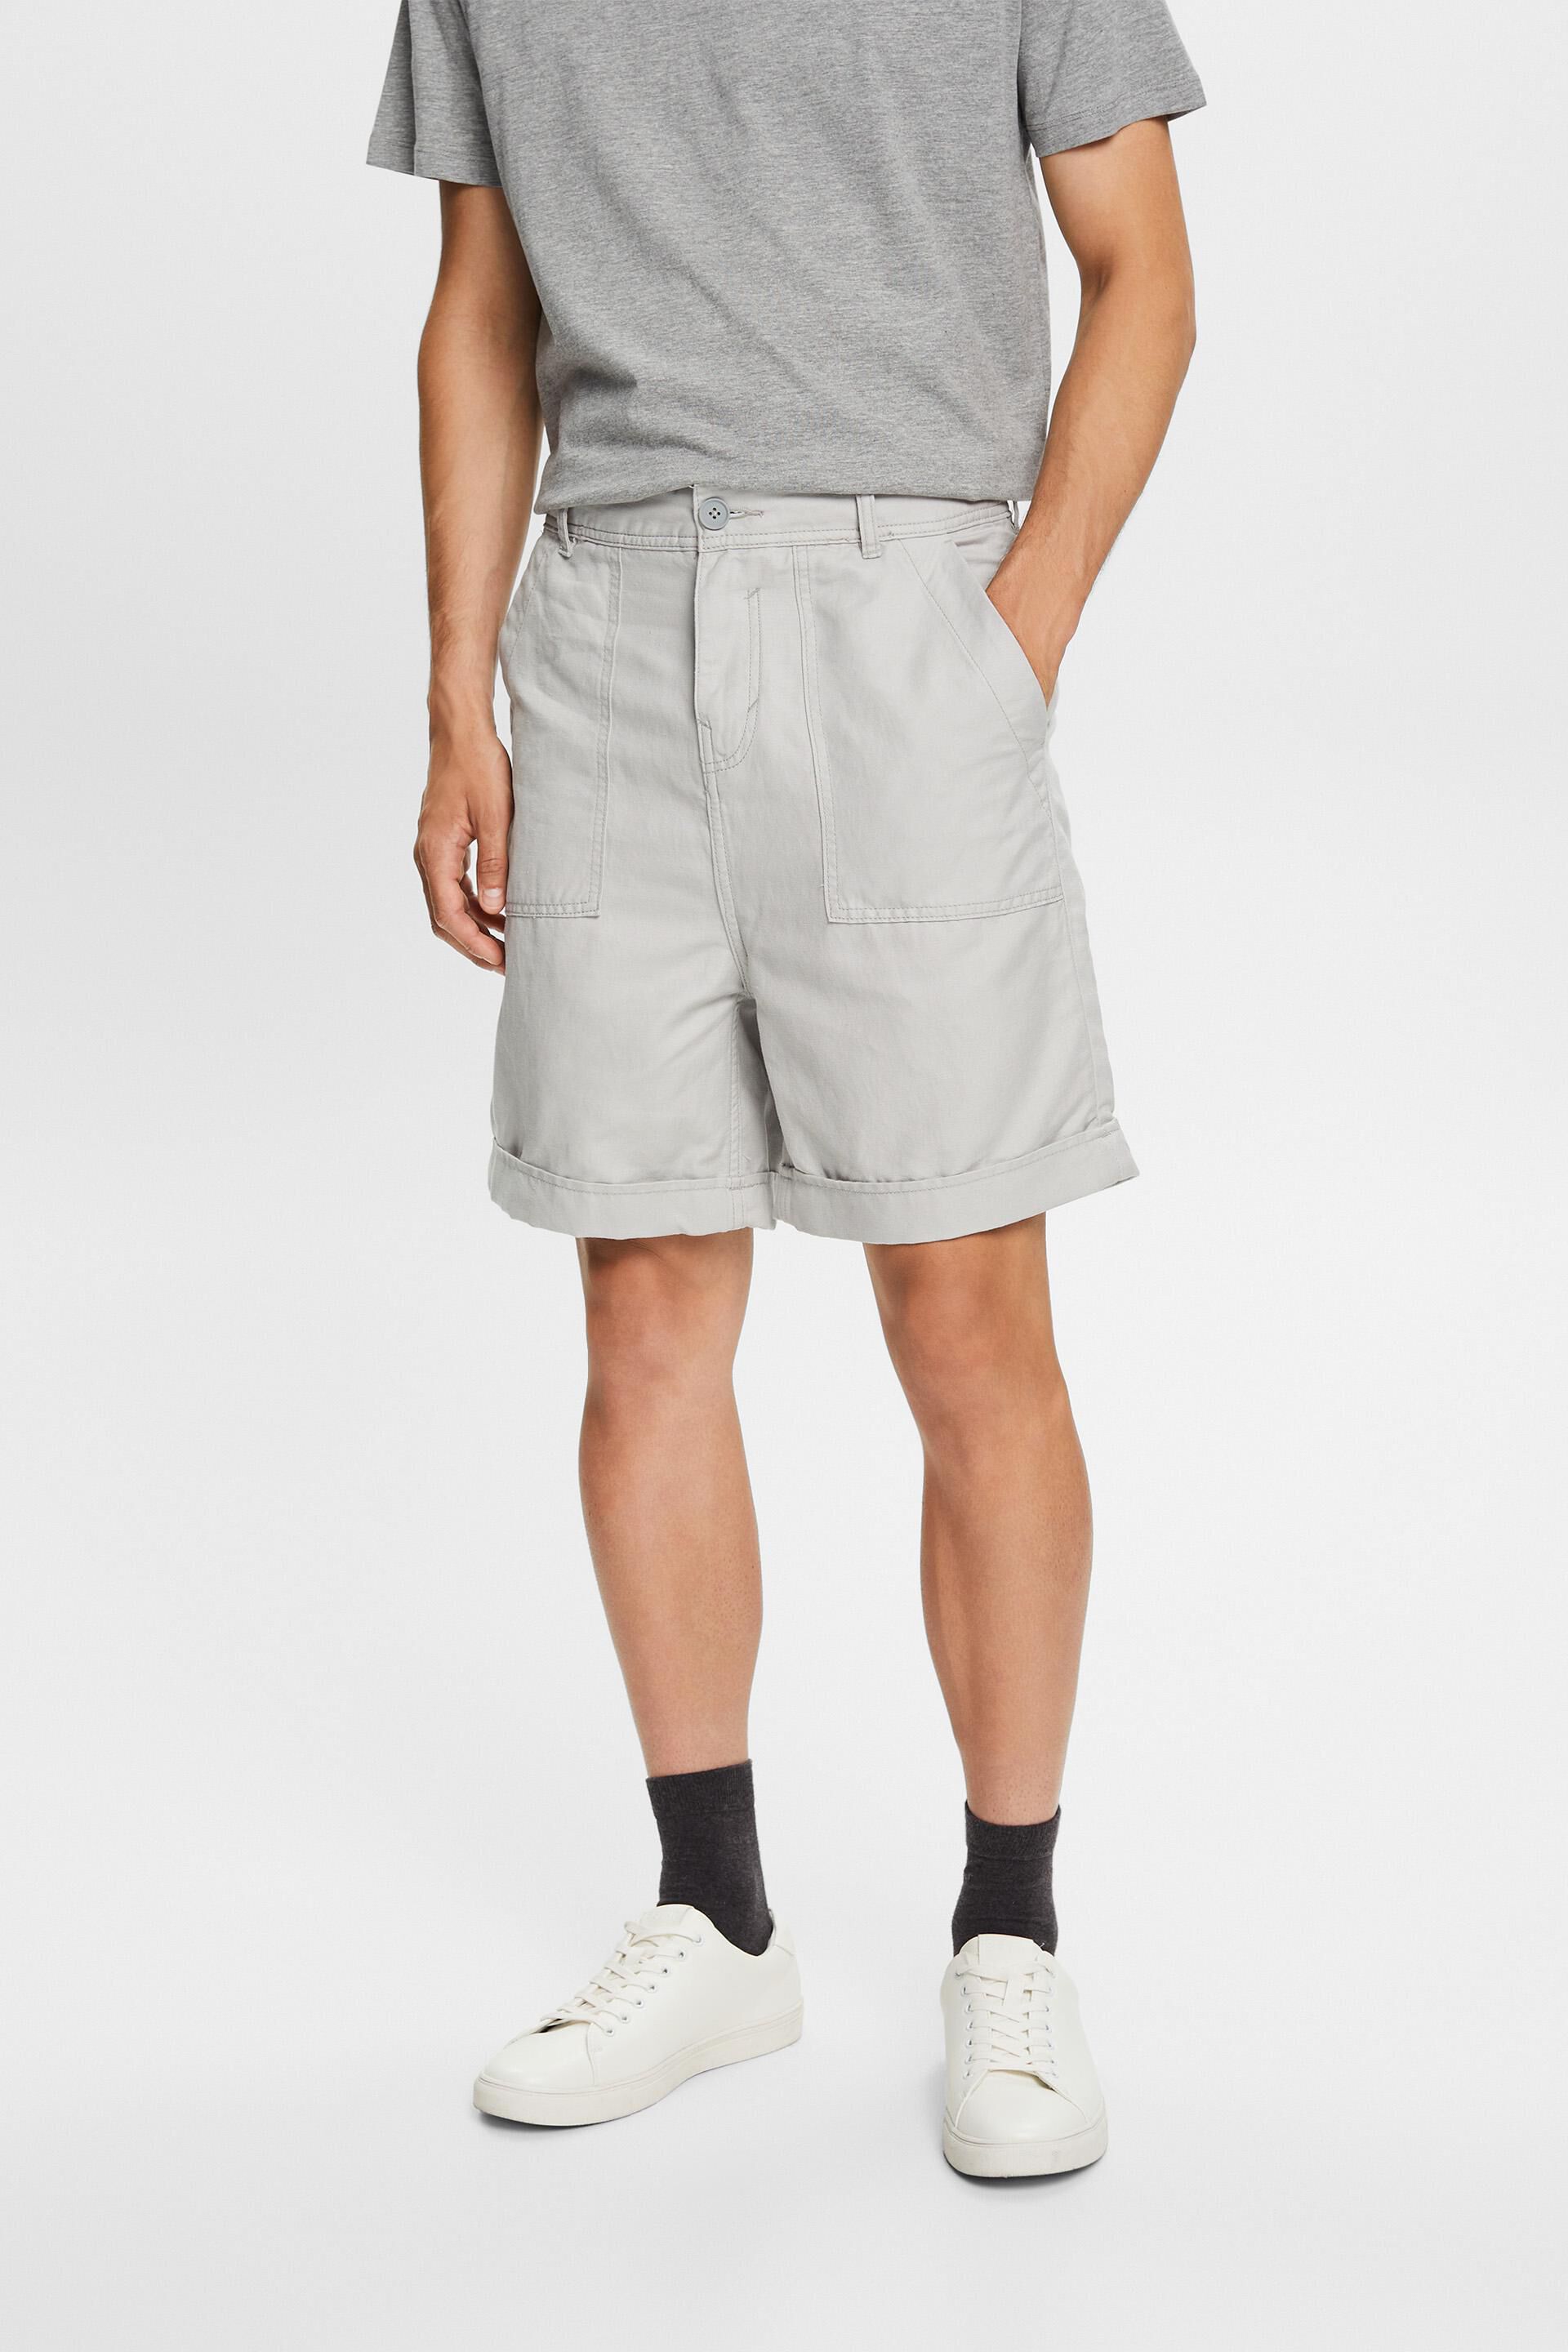 Esprit shorts, blend Bermuda cotton-linen